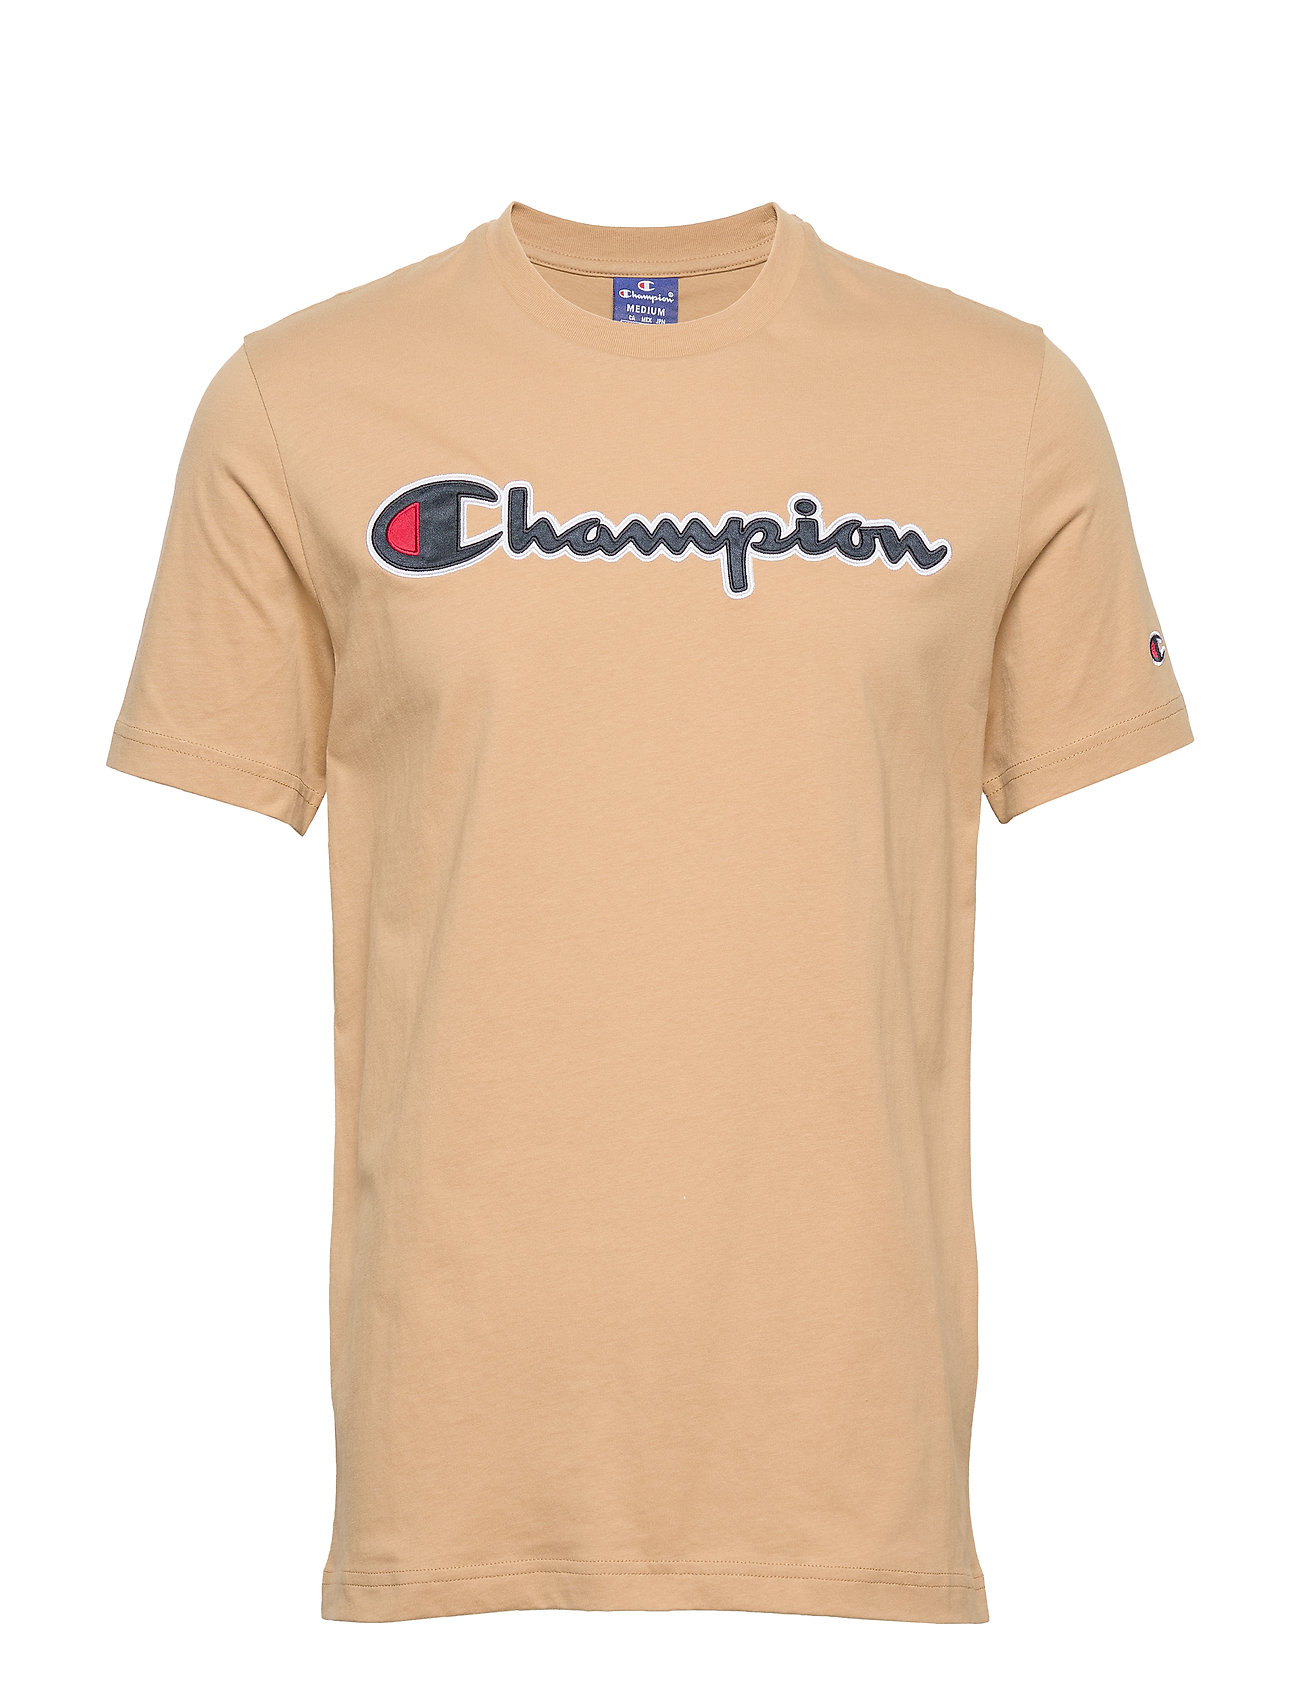 champion tan shirt